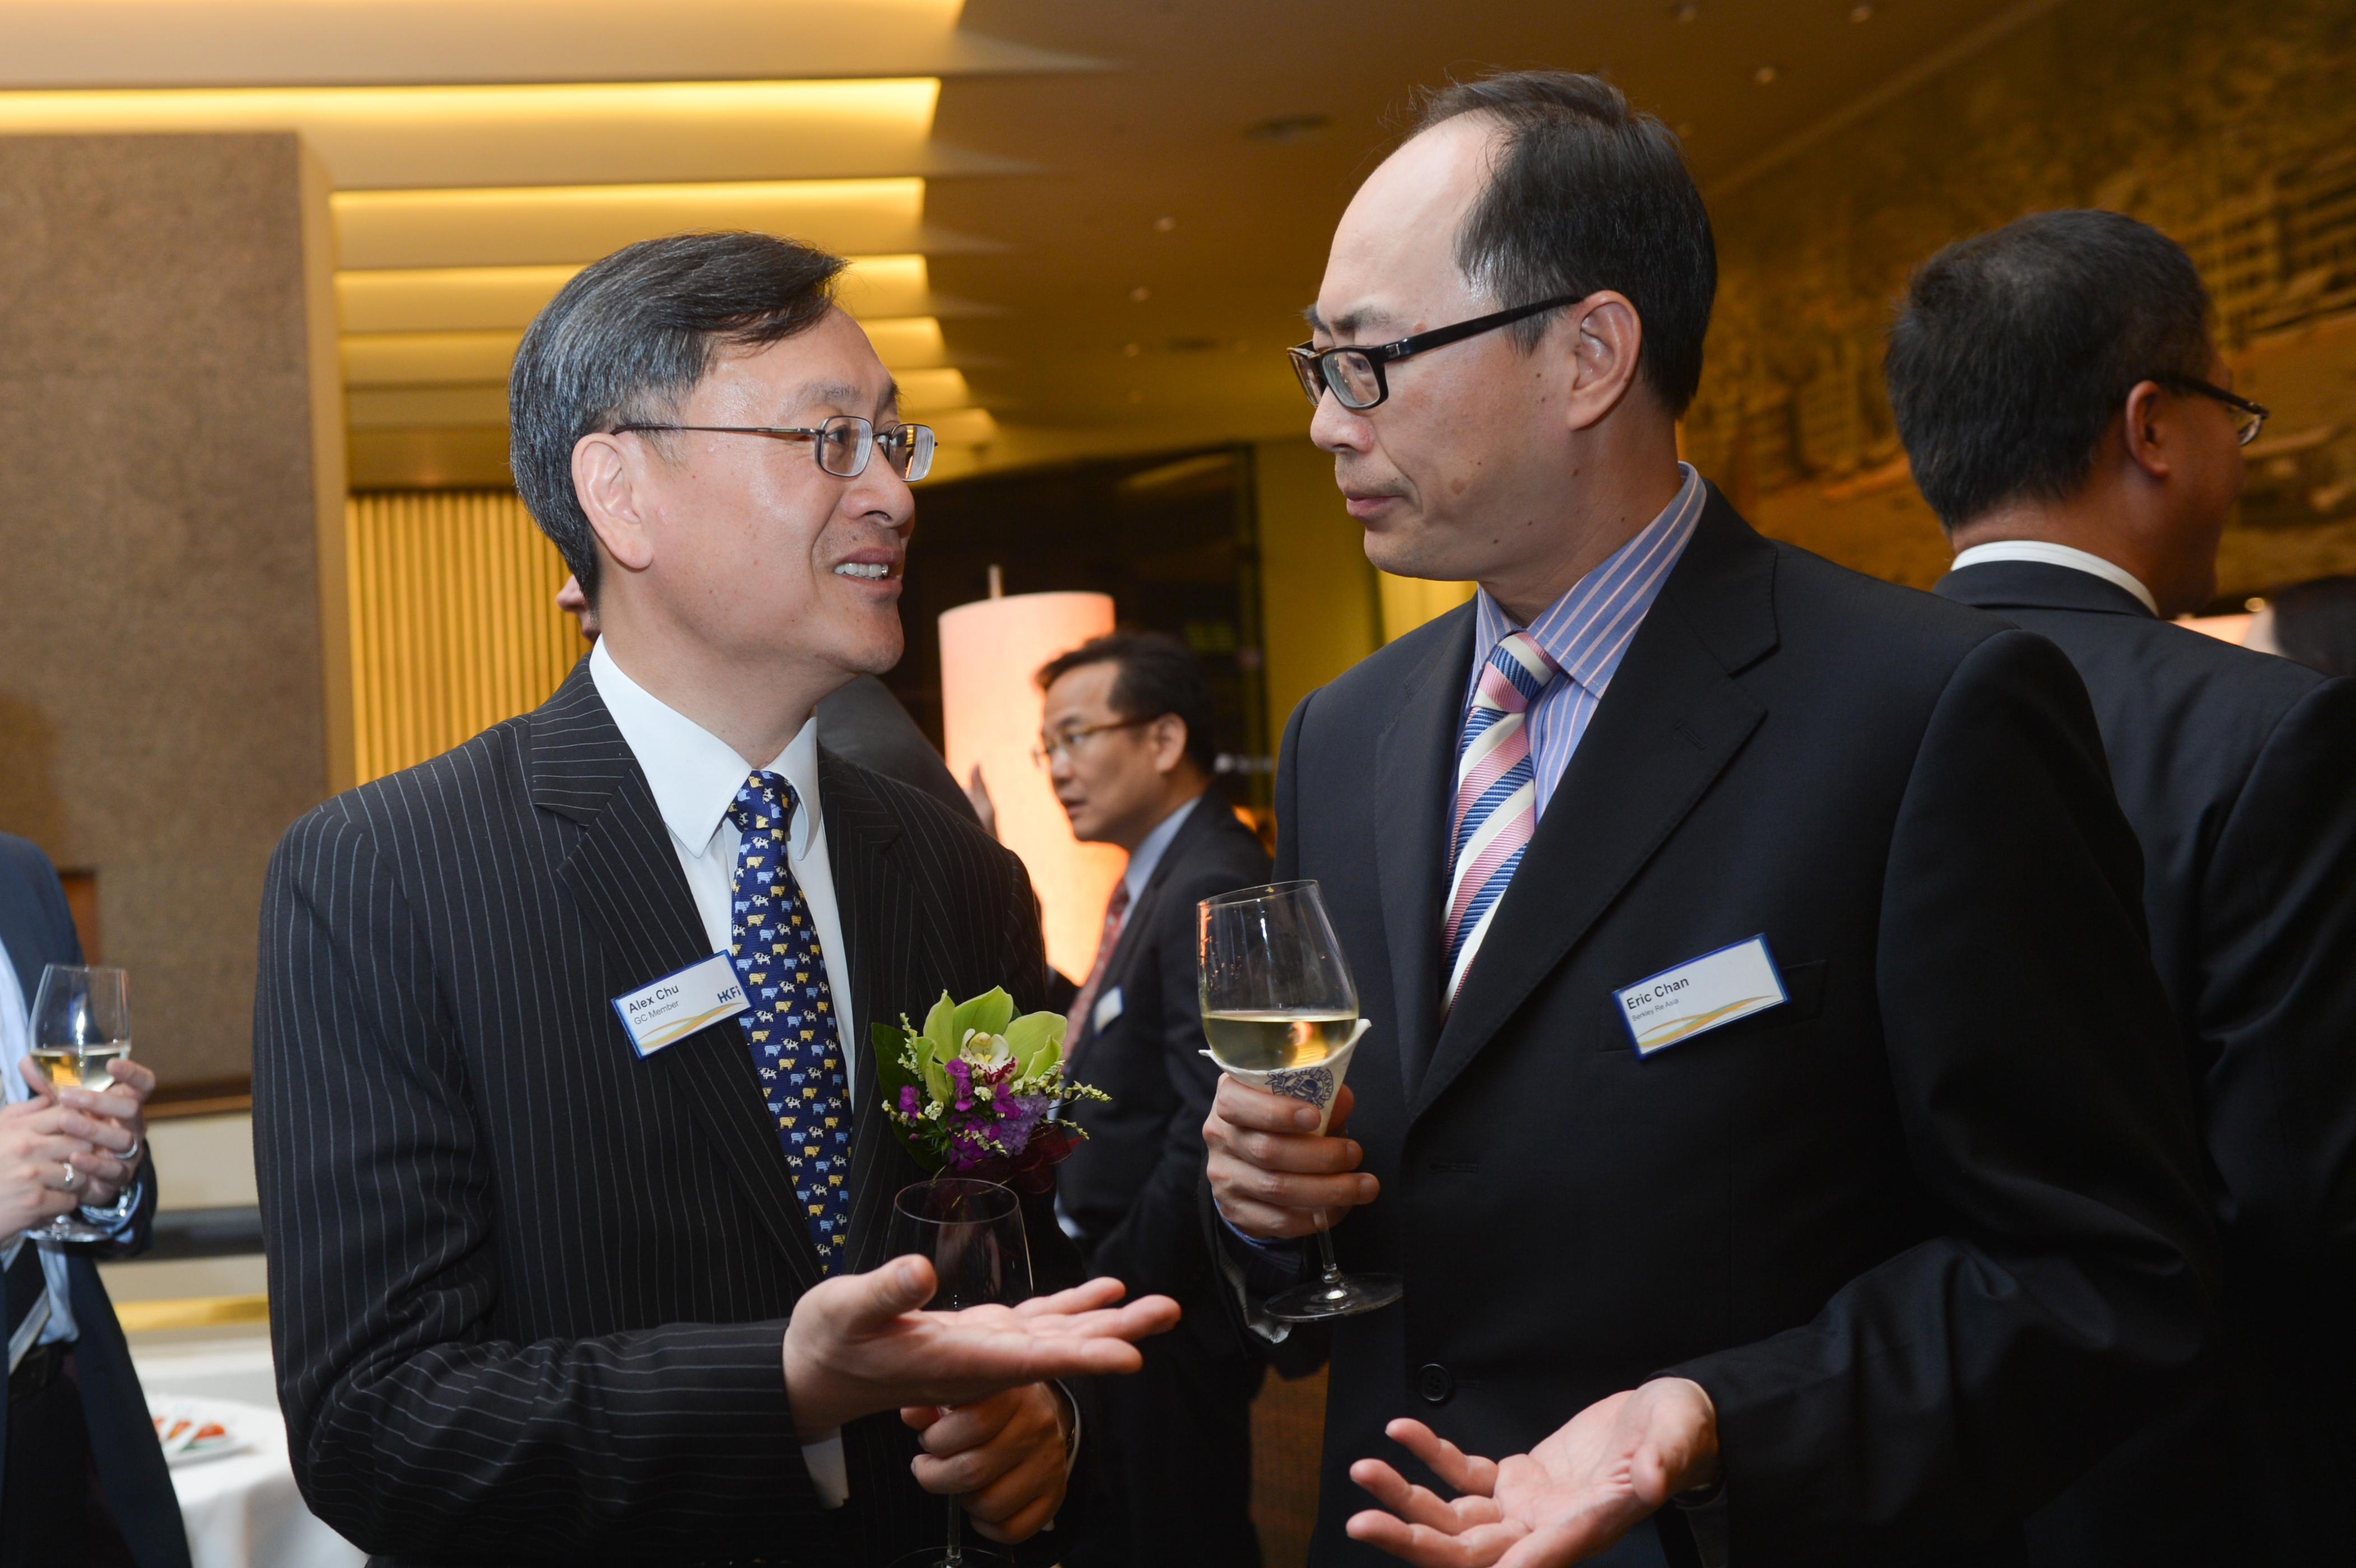 HKFI Annual Reception 2013 (2)